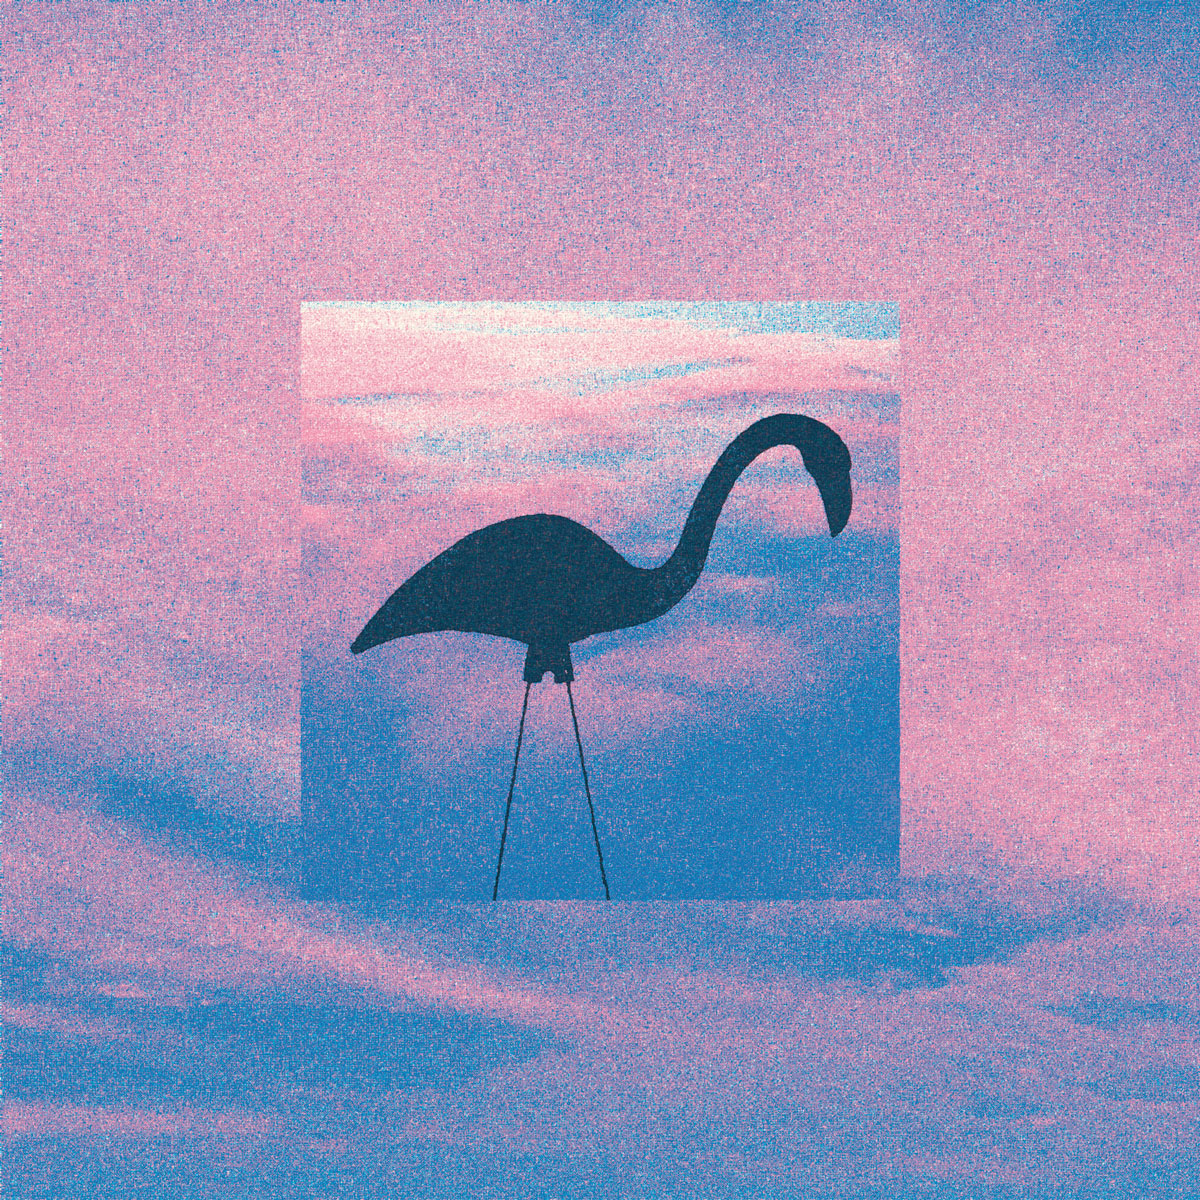 Flamingosis